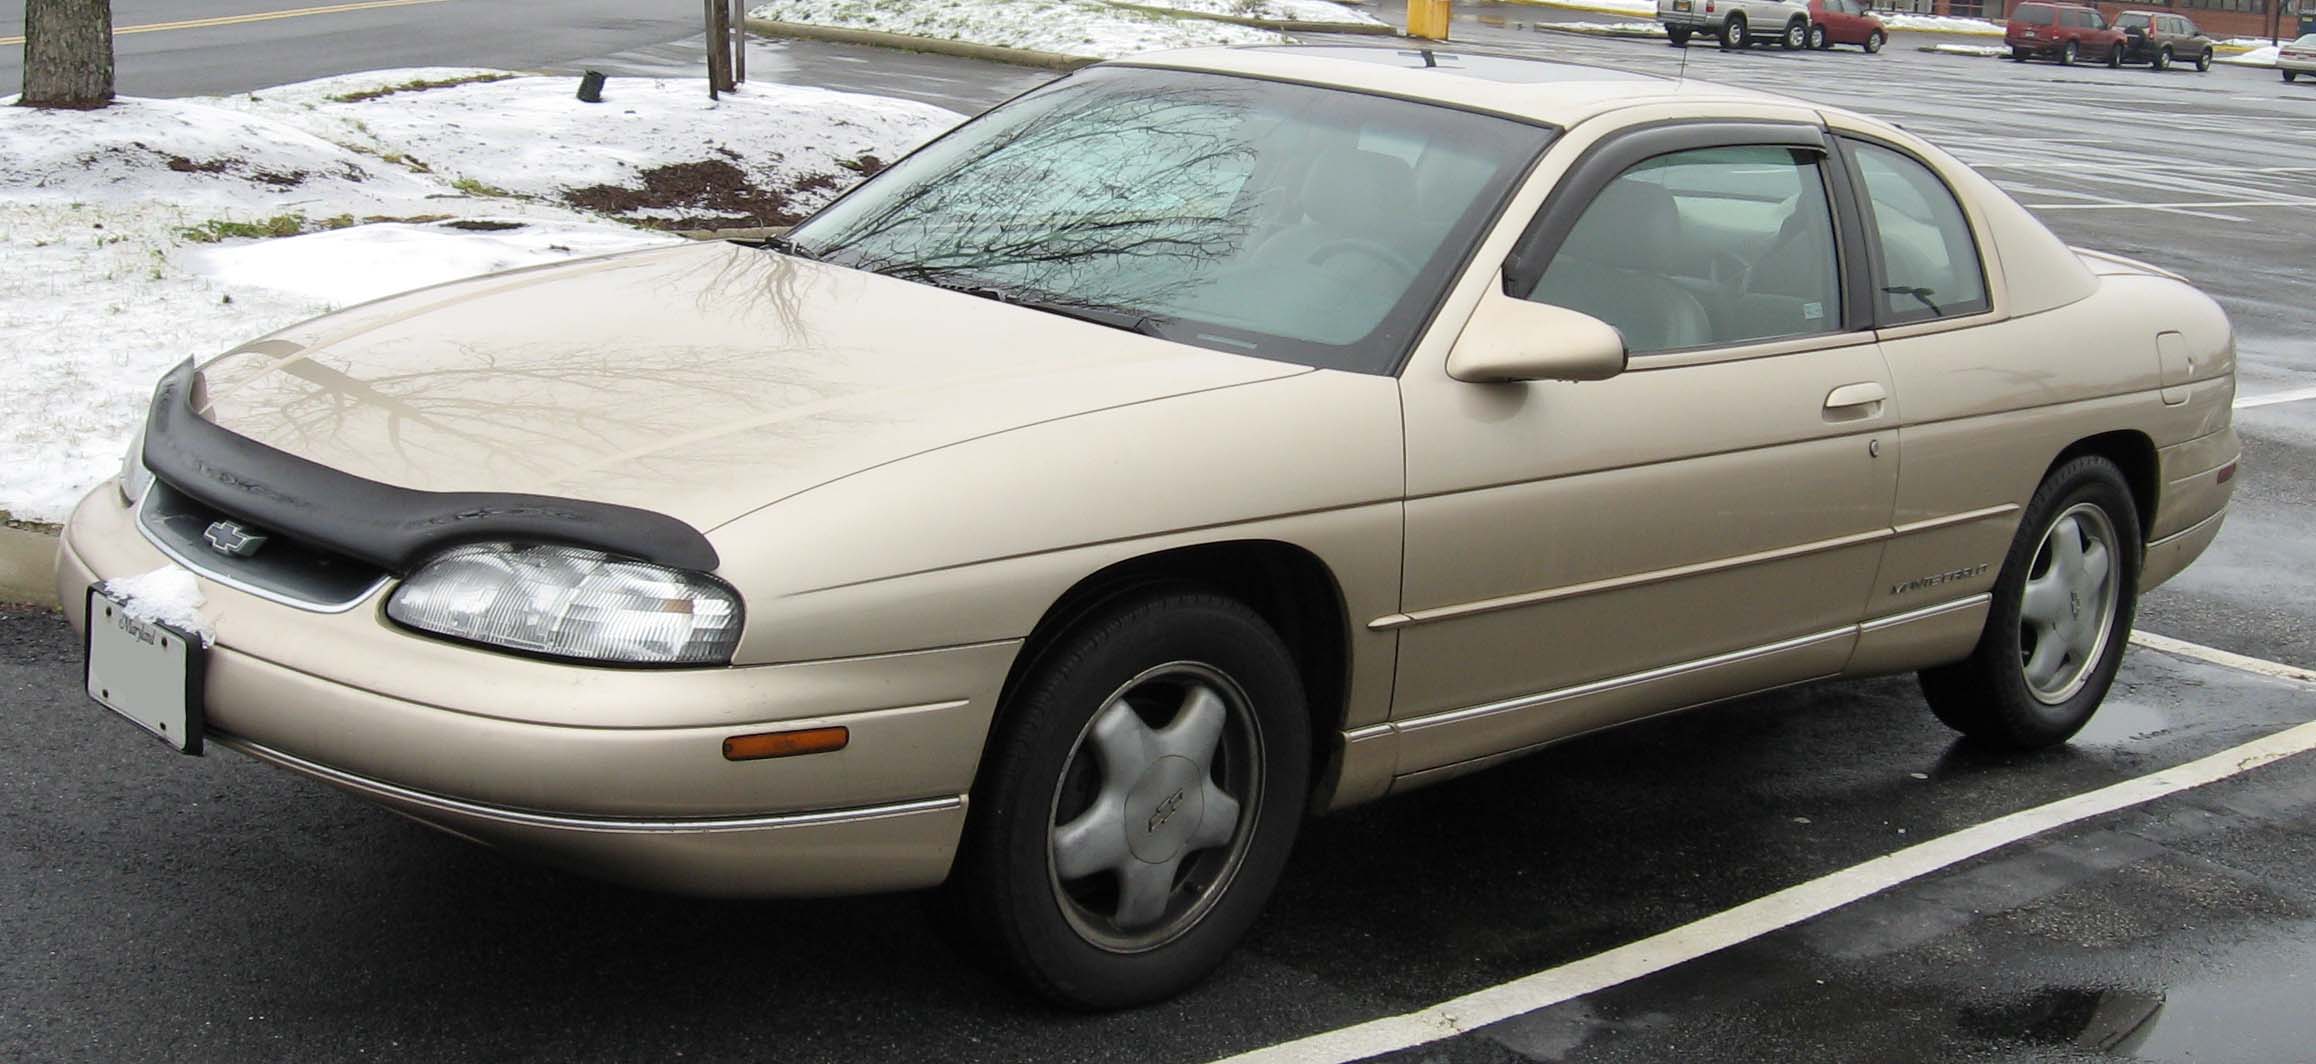 File:95-99 Chevrolet Monte Carlo.jpg - Wikimedia Commons